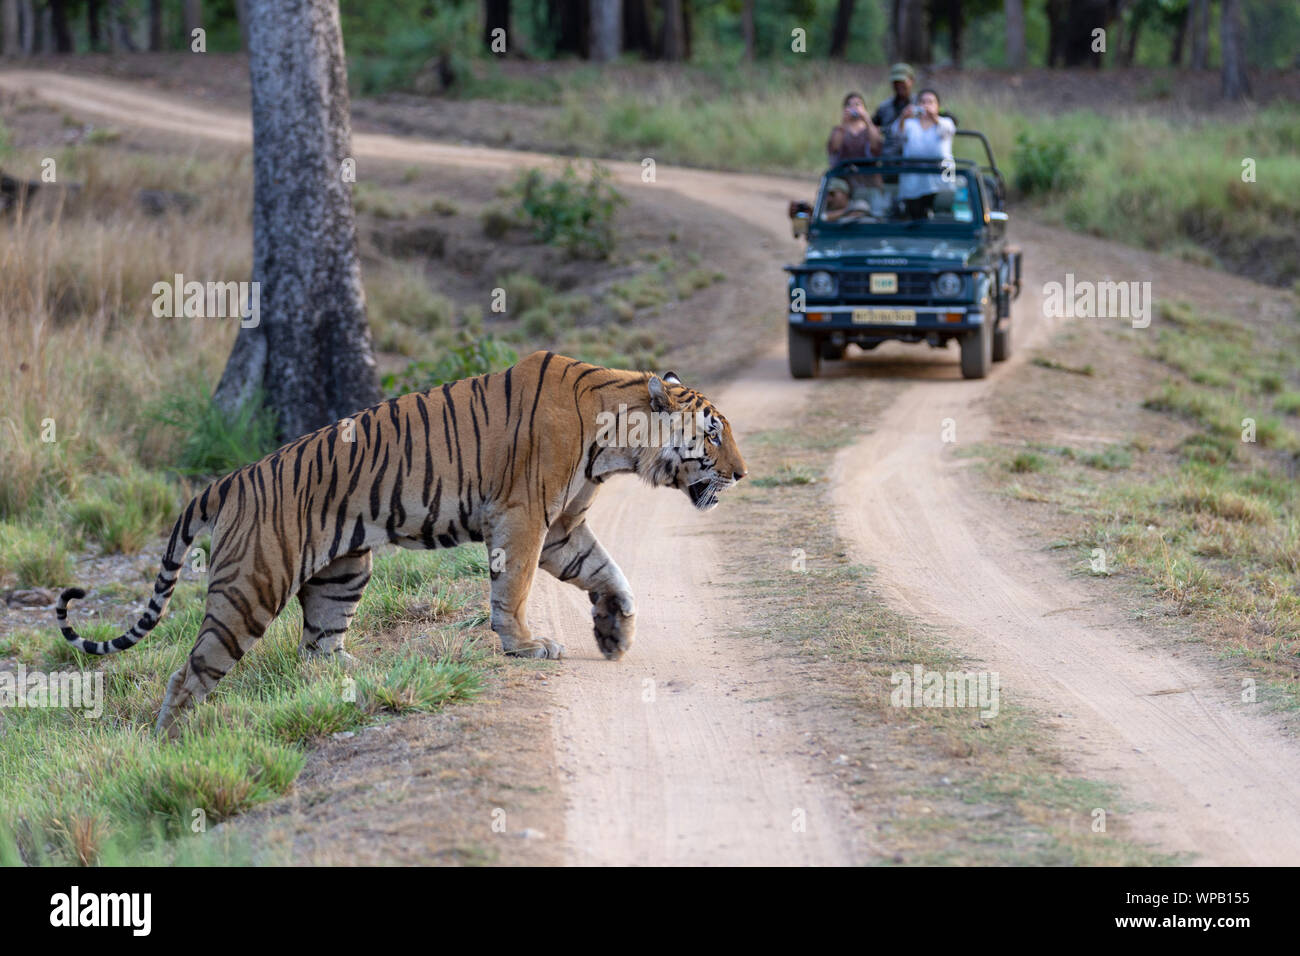 El Tigre de Bengala real o Panthera Tigris Tigris cruce de carretera delante del turista en jeep safari en Kanha National Park de Madhya Pradesh, India central Foto de stock